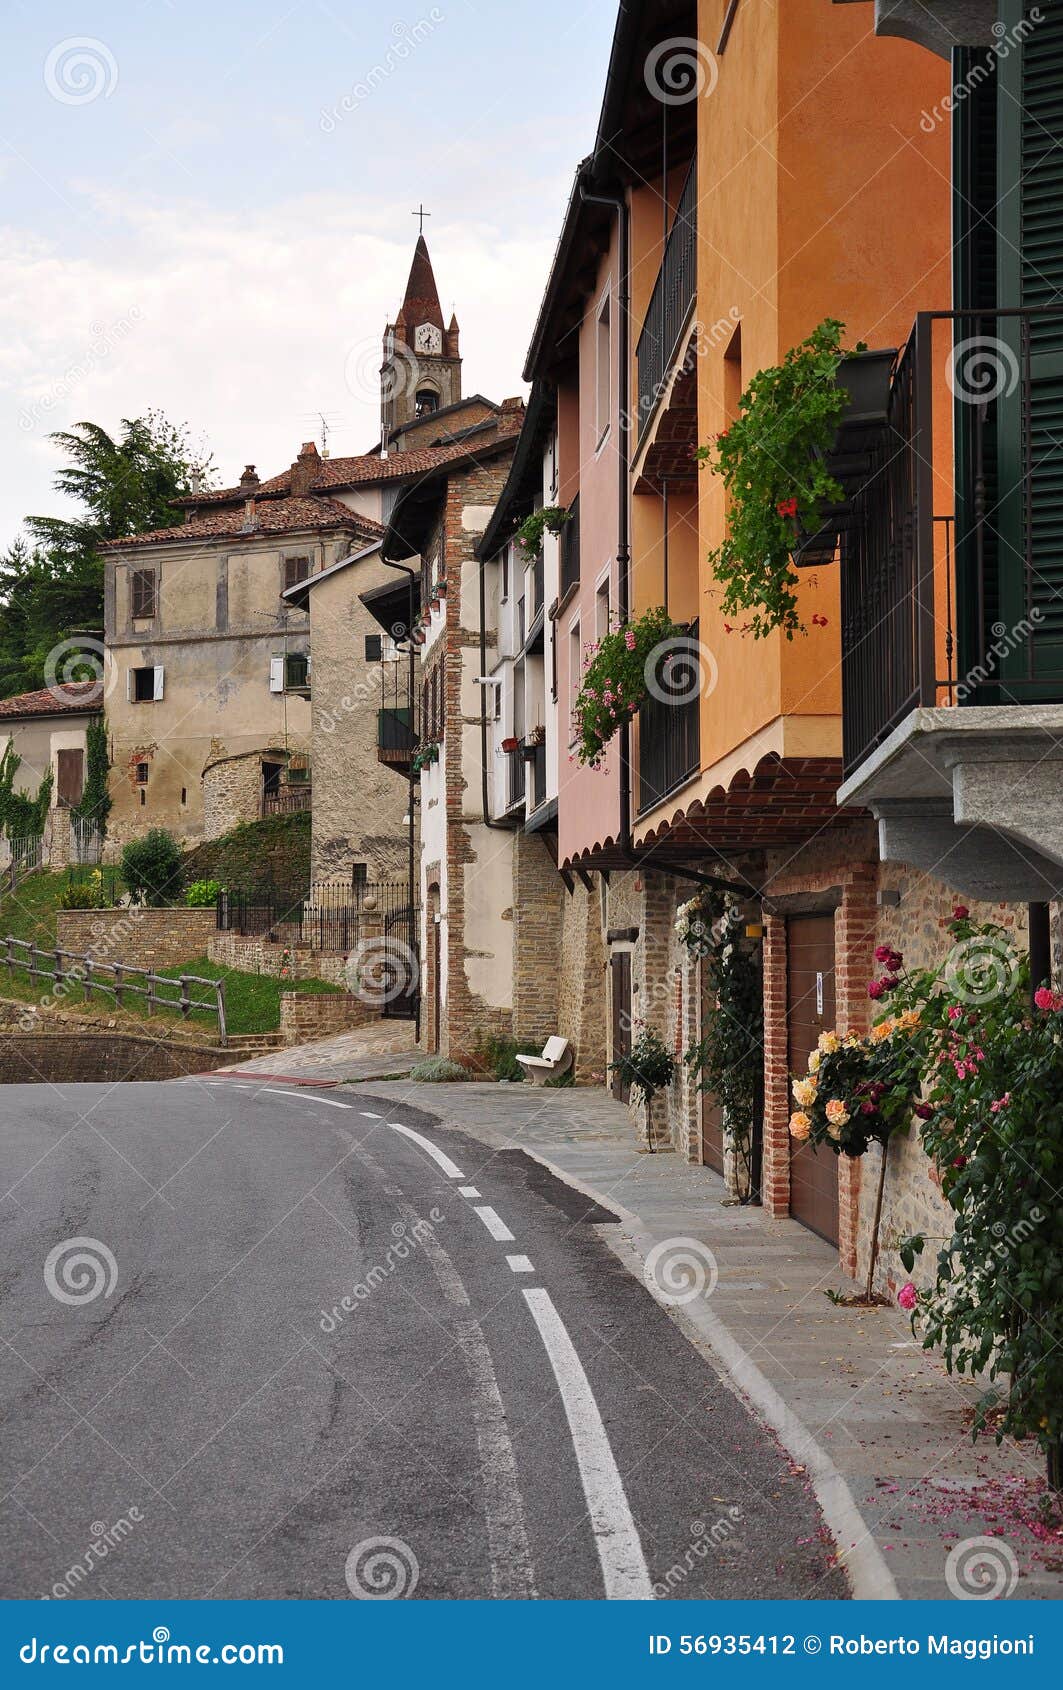 village of bossolasco, langhe, south piemonte, italy